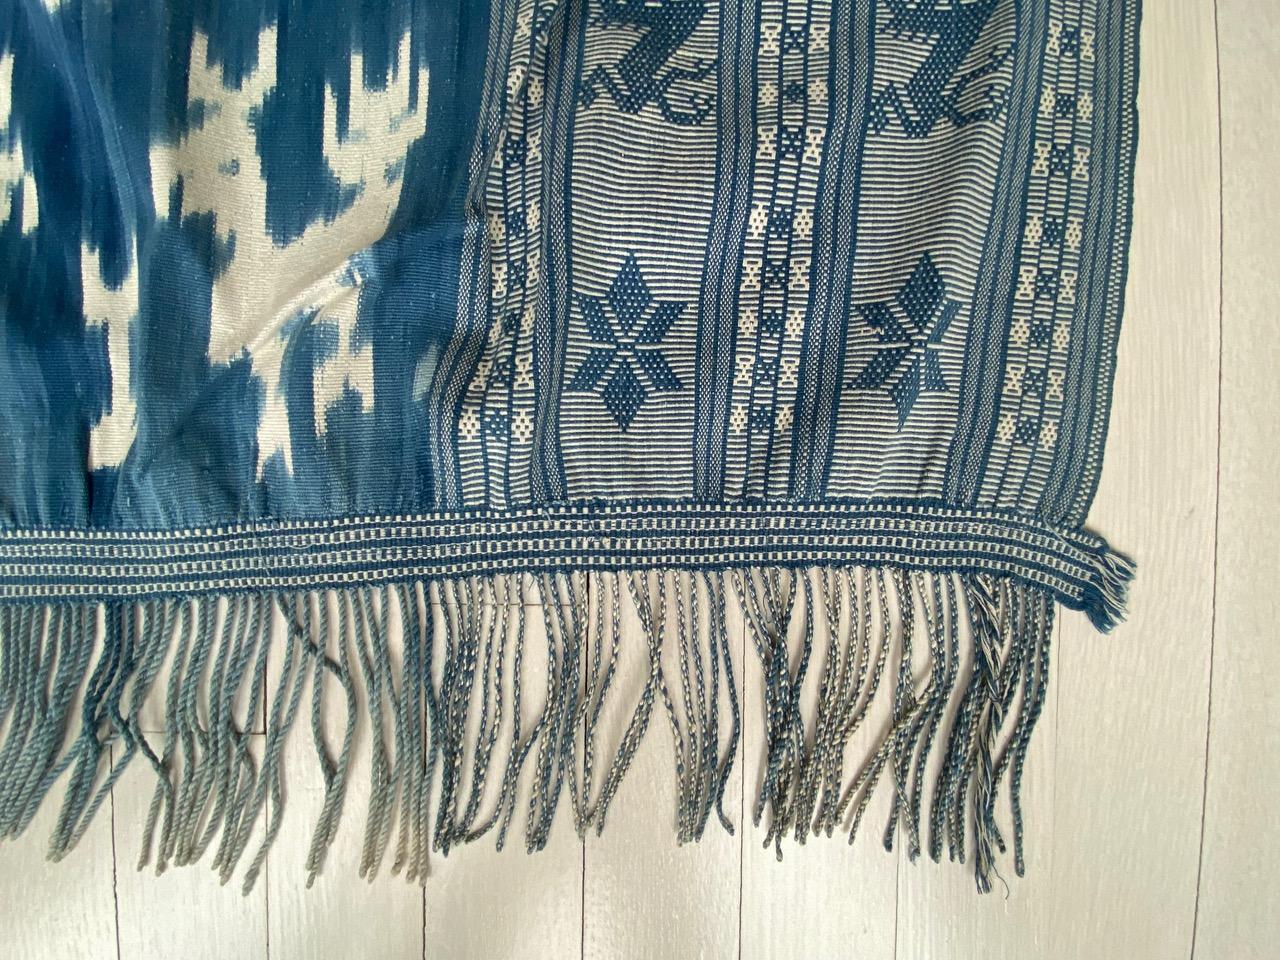 Hand-Woven Andrianna Shamaris Antique Indigo Hand Woven Cotton Large Ikat